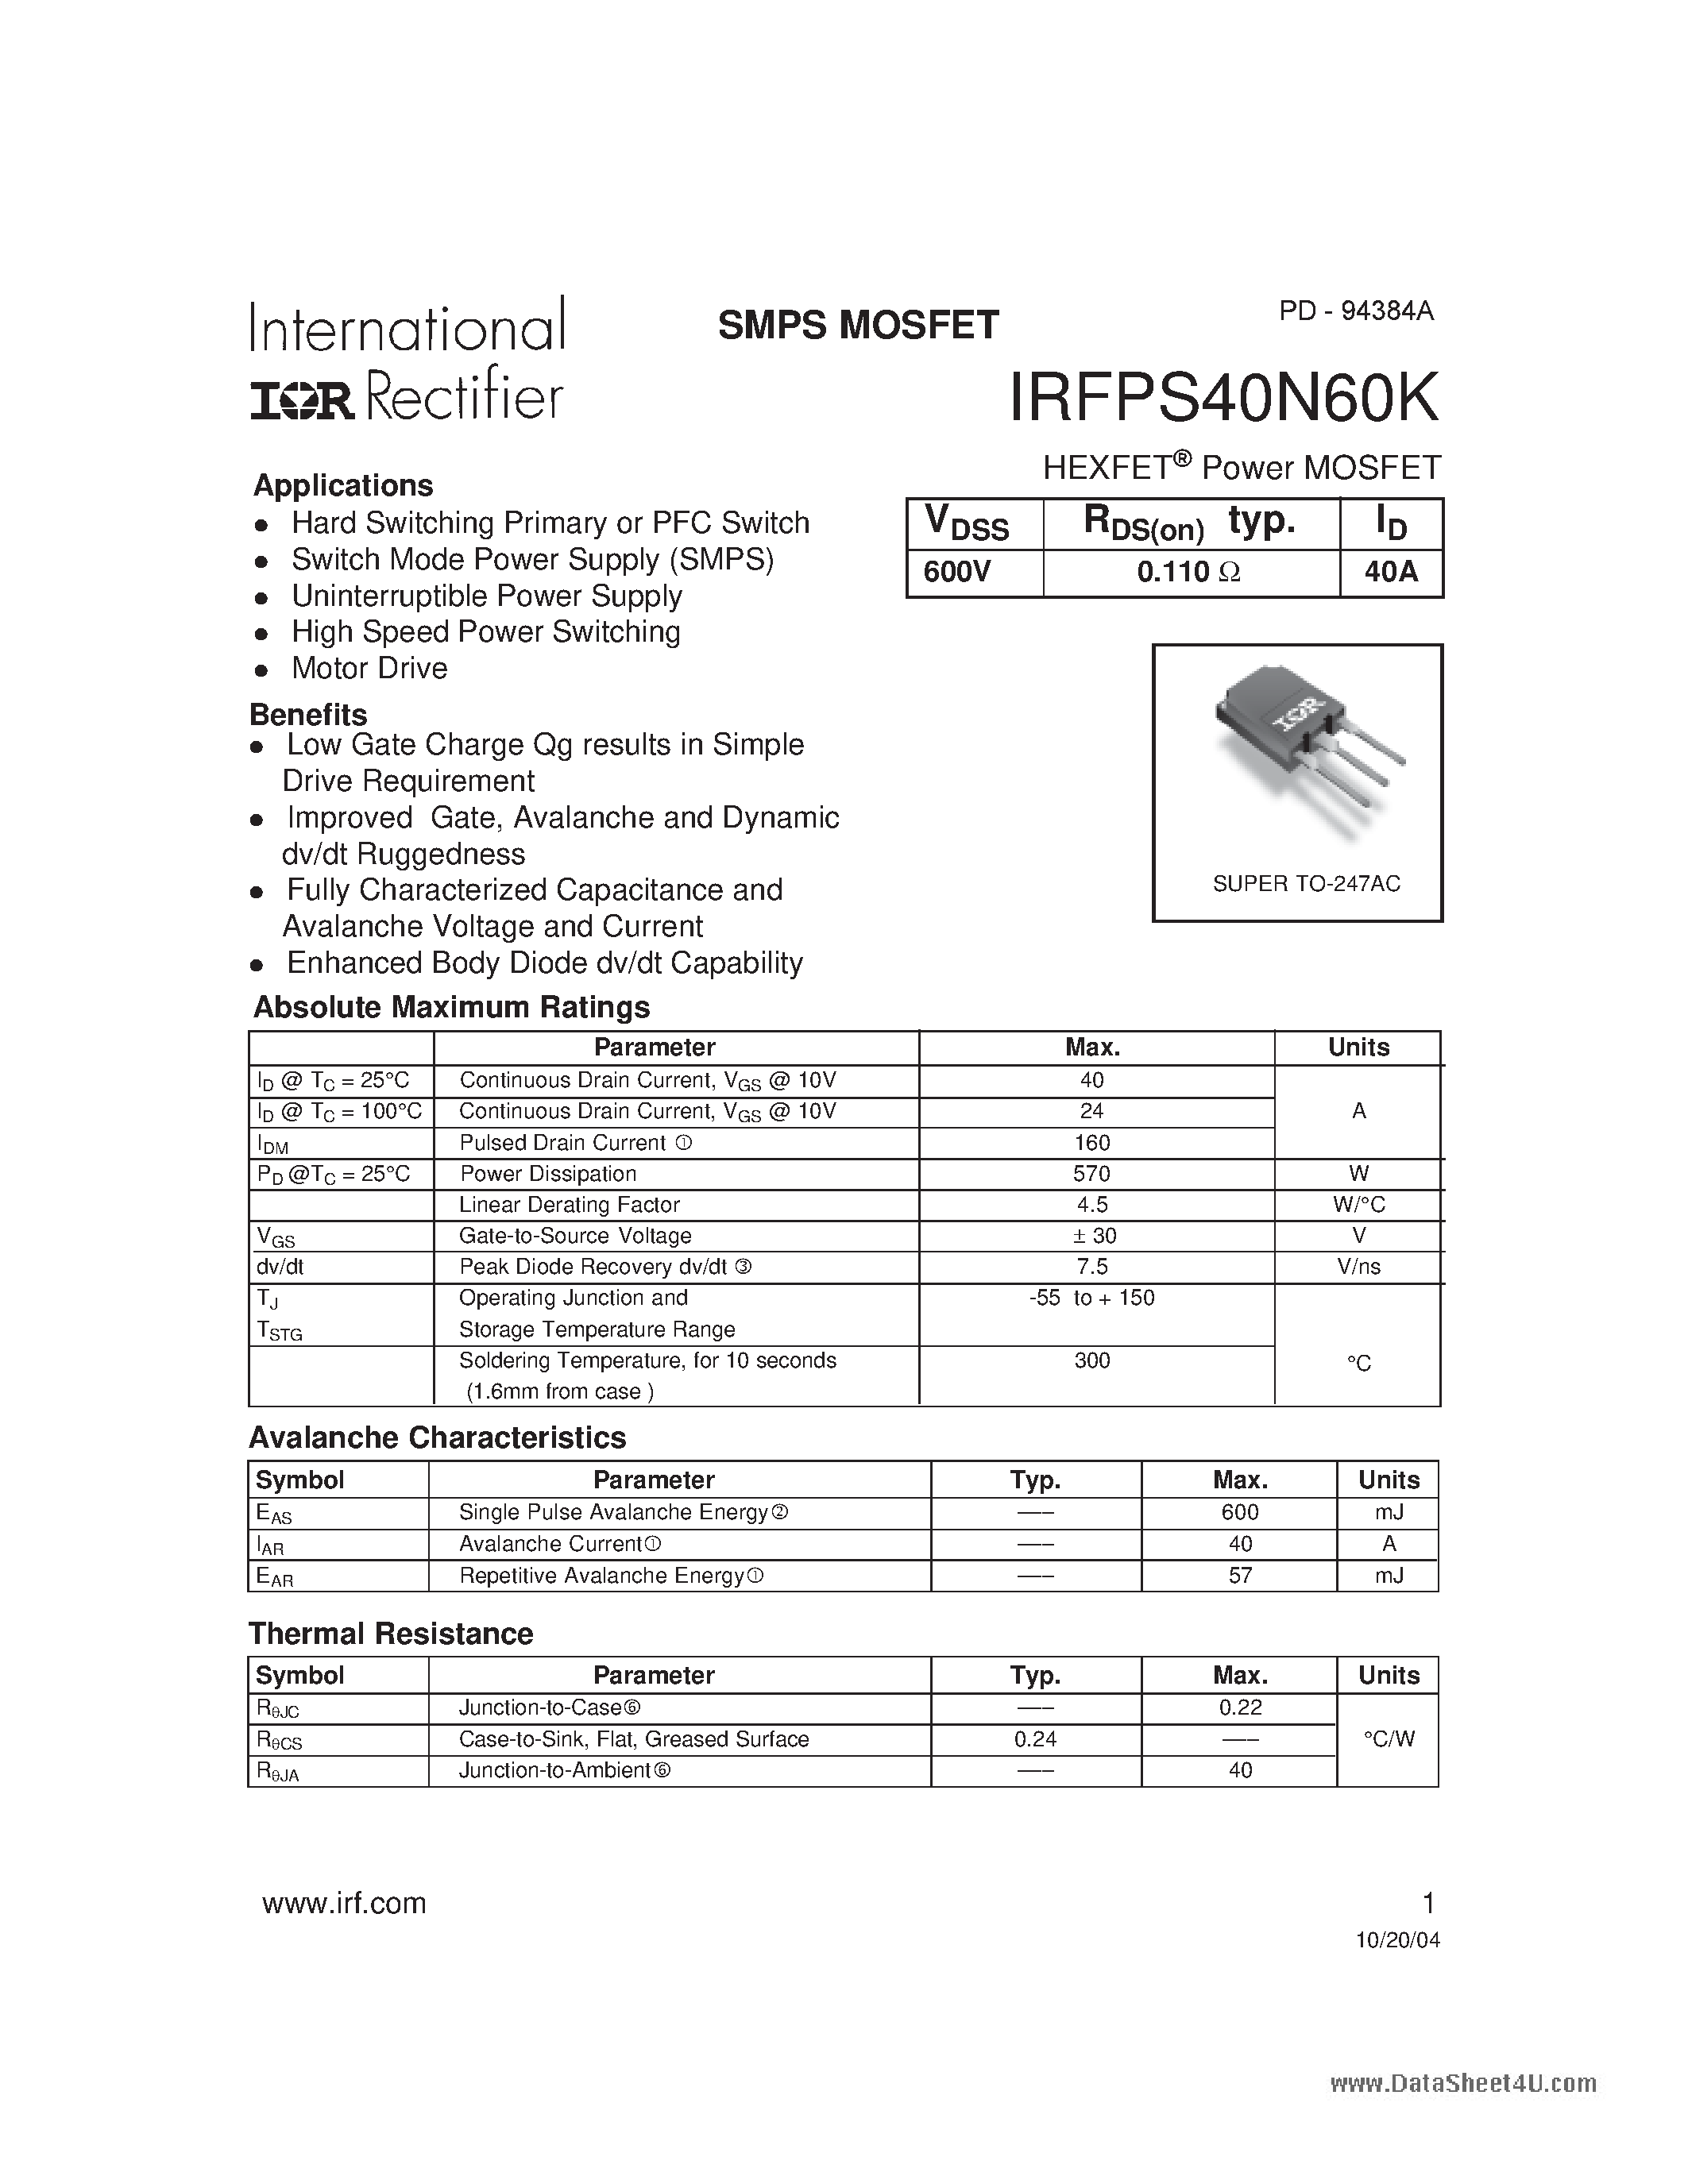 Datasheet IRFPS40N60K - HEXFET Power MOSFET page 1